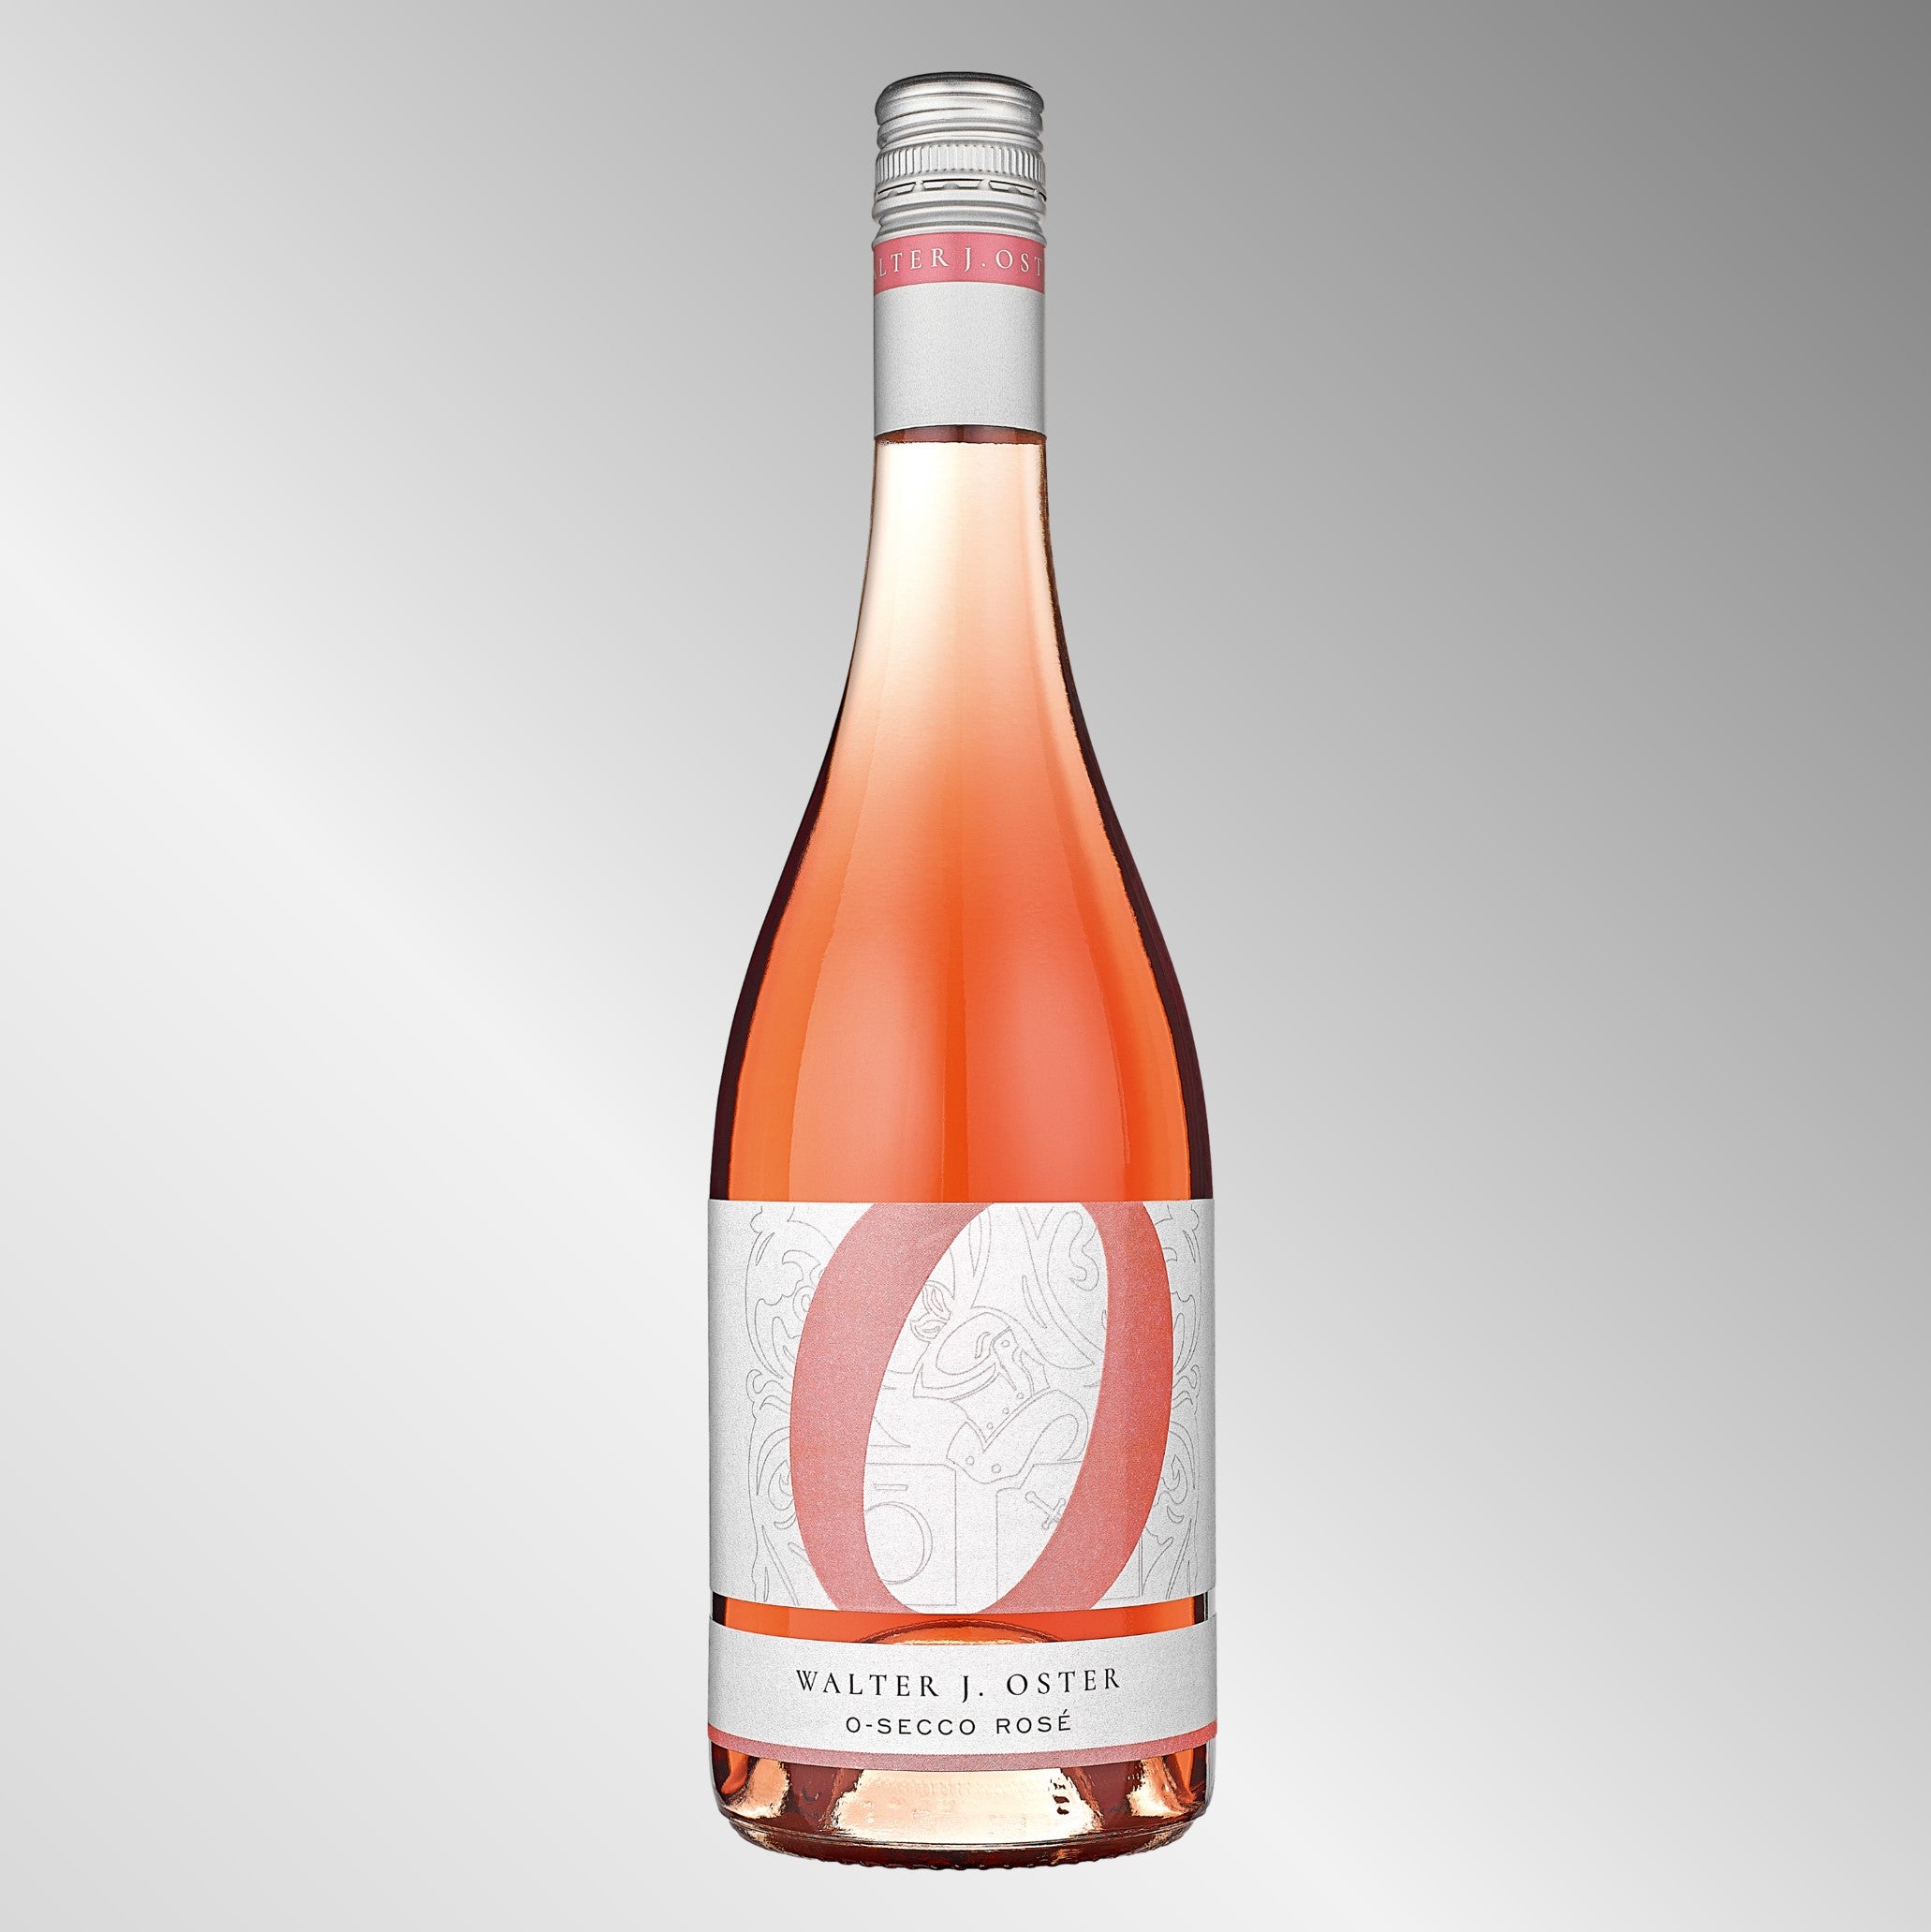 O-Secco Rosé - MILD | Weinmanufaktur Walter J. Oster | 750ml - 8,5% vol